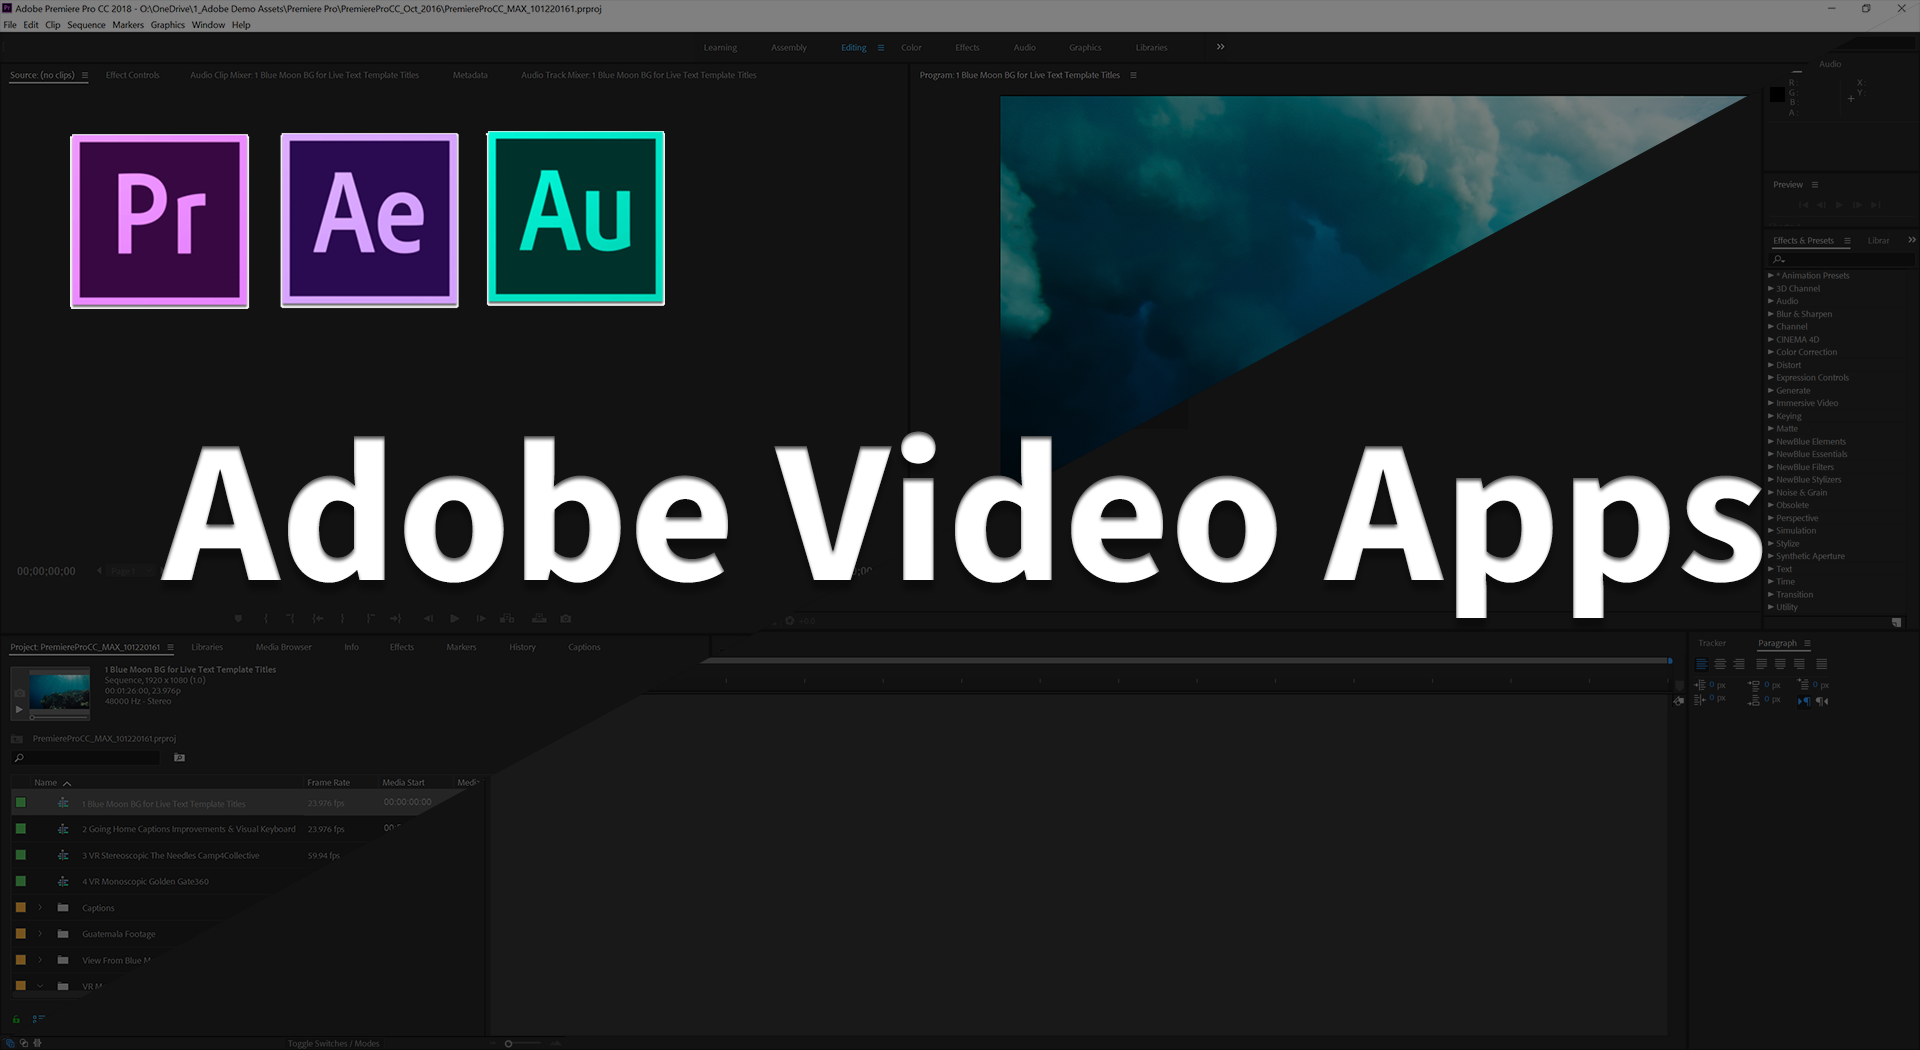 Adobe Video Apps